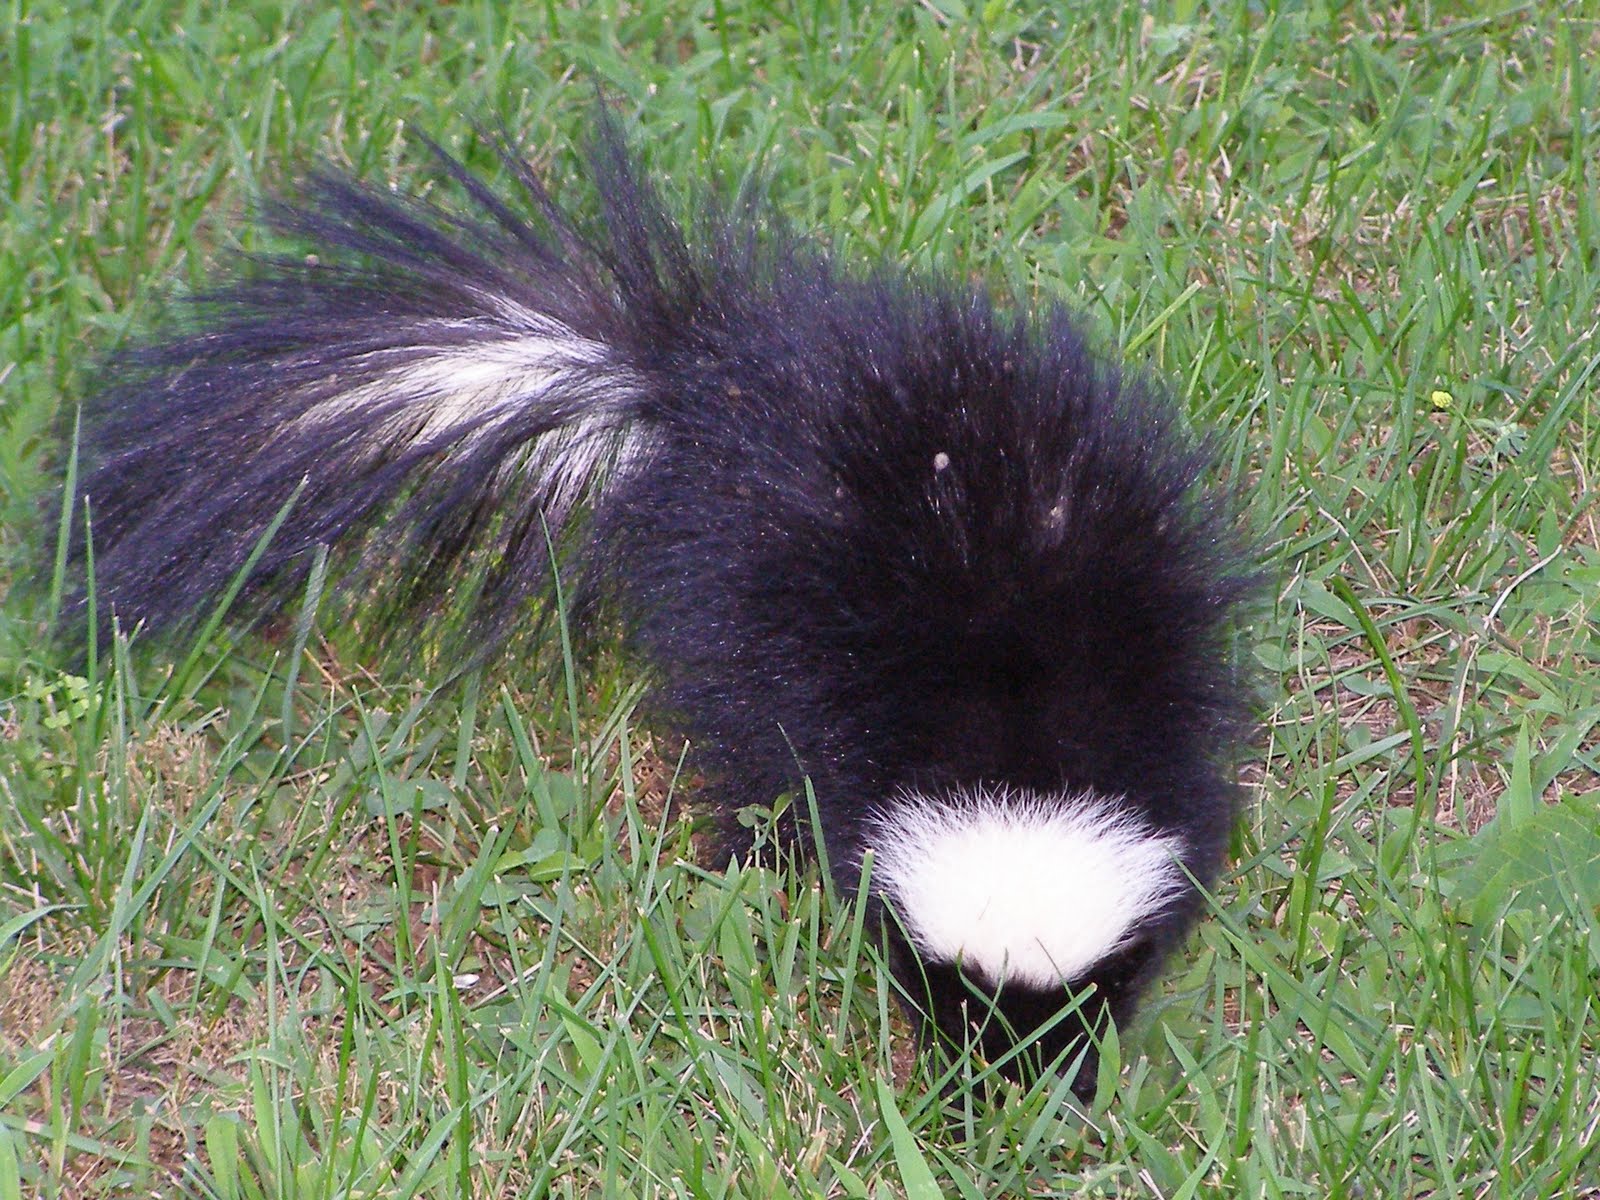 Black skunk photo